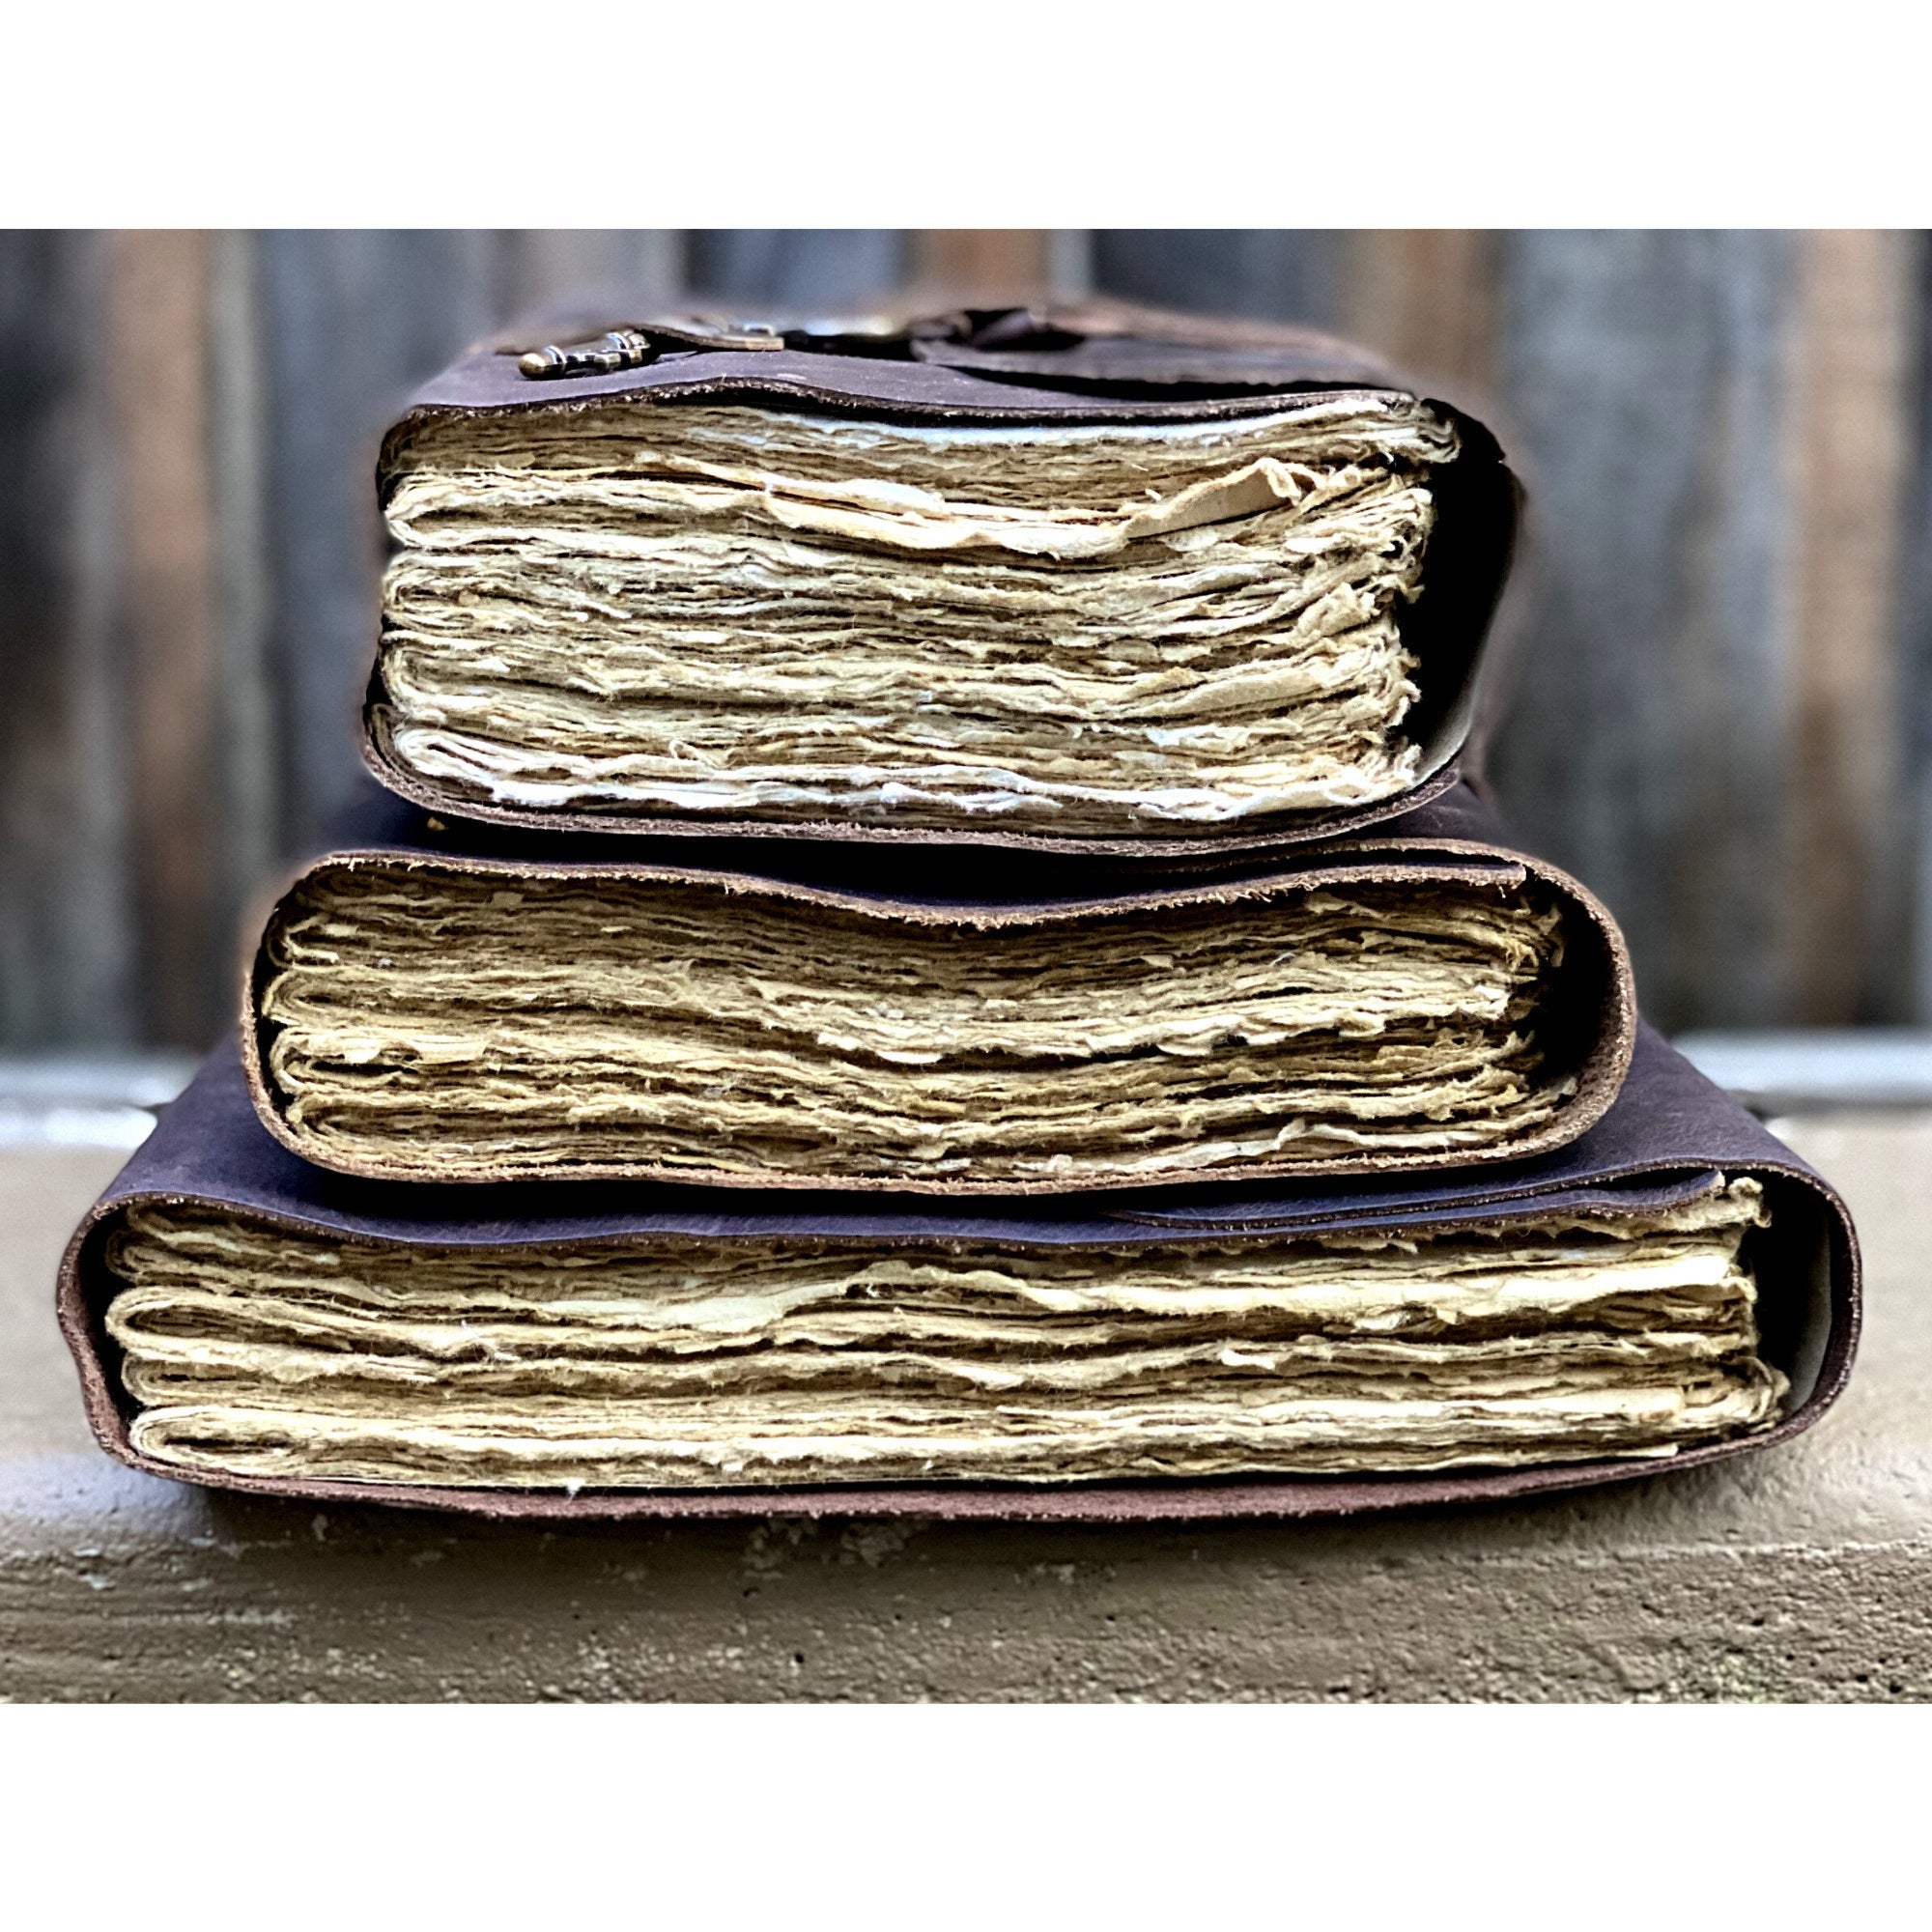 Leather Journal - Antique Handmade Deckle Edge Vintage Paper